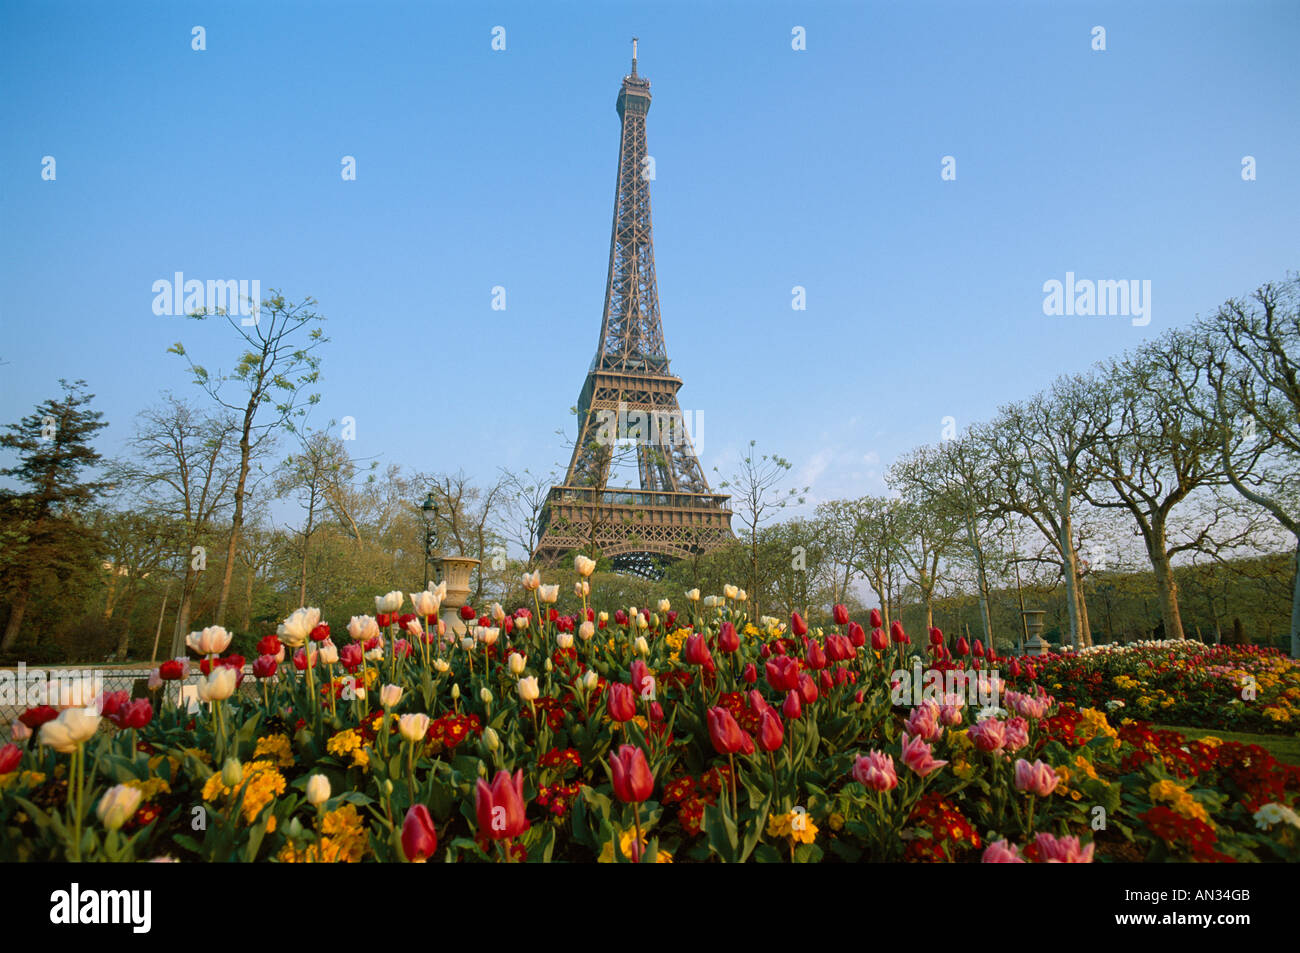 Eiffel Tower (Tour Eiffel) with Spring Flowers, Paris, France Stock Photo